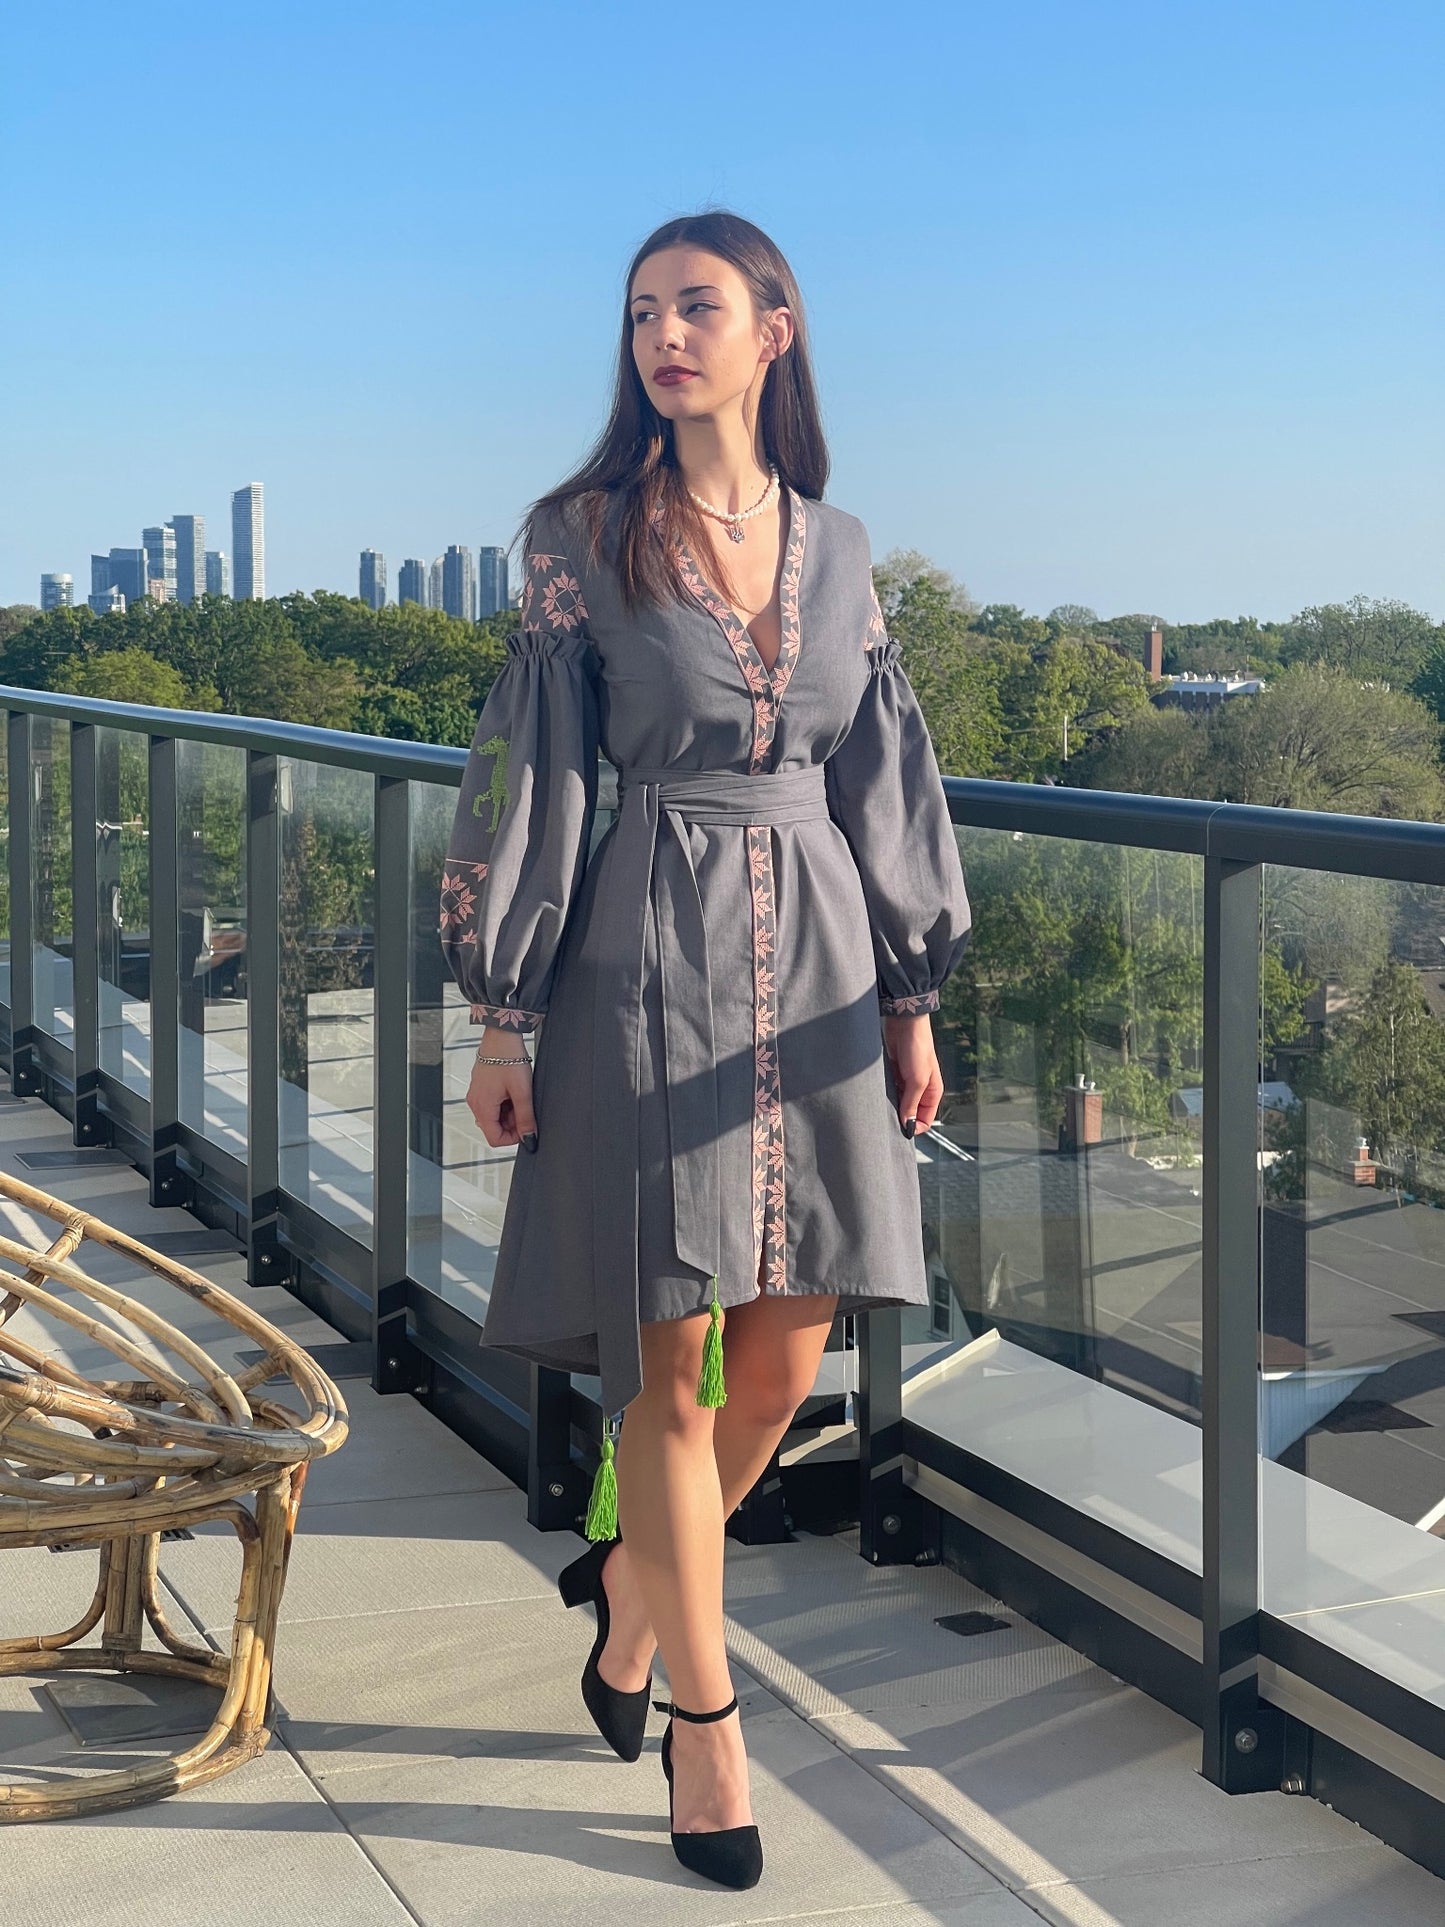 The Grey Short Dress